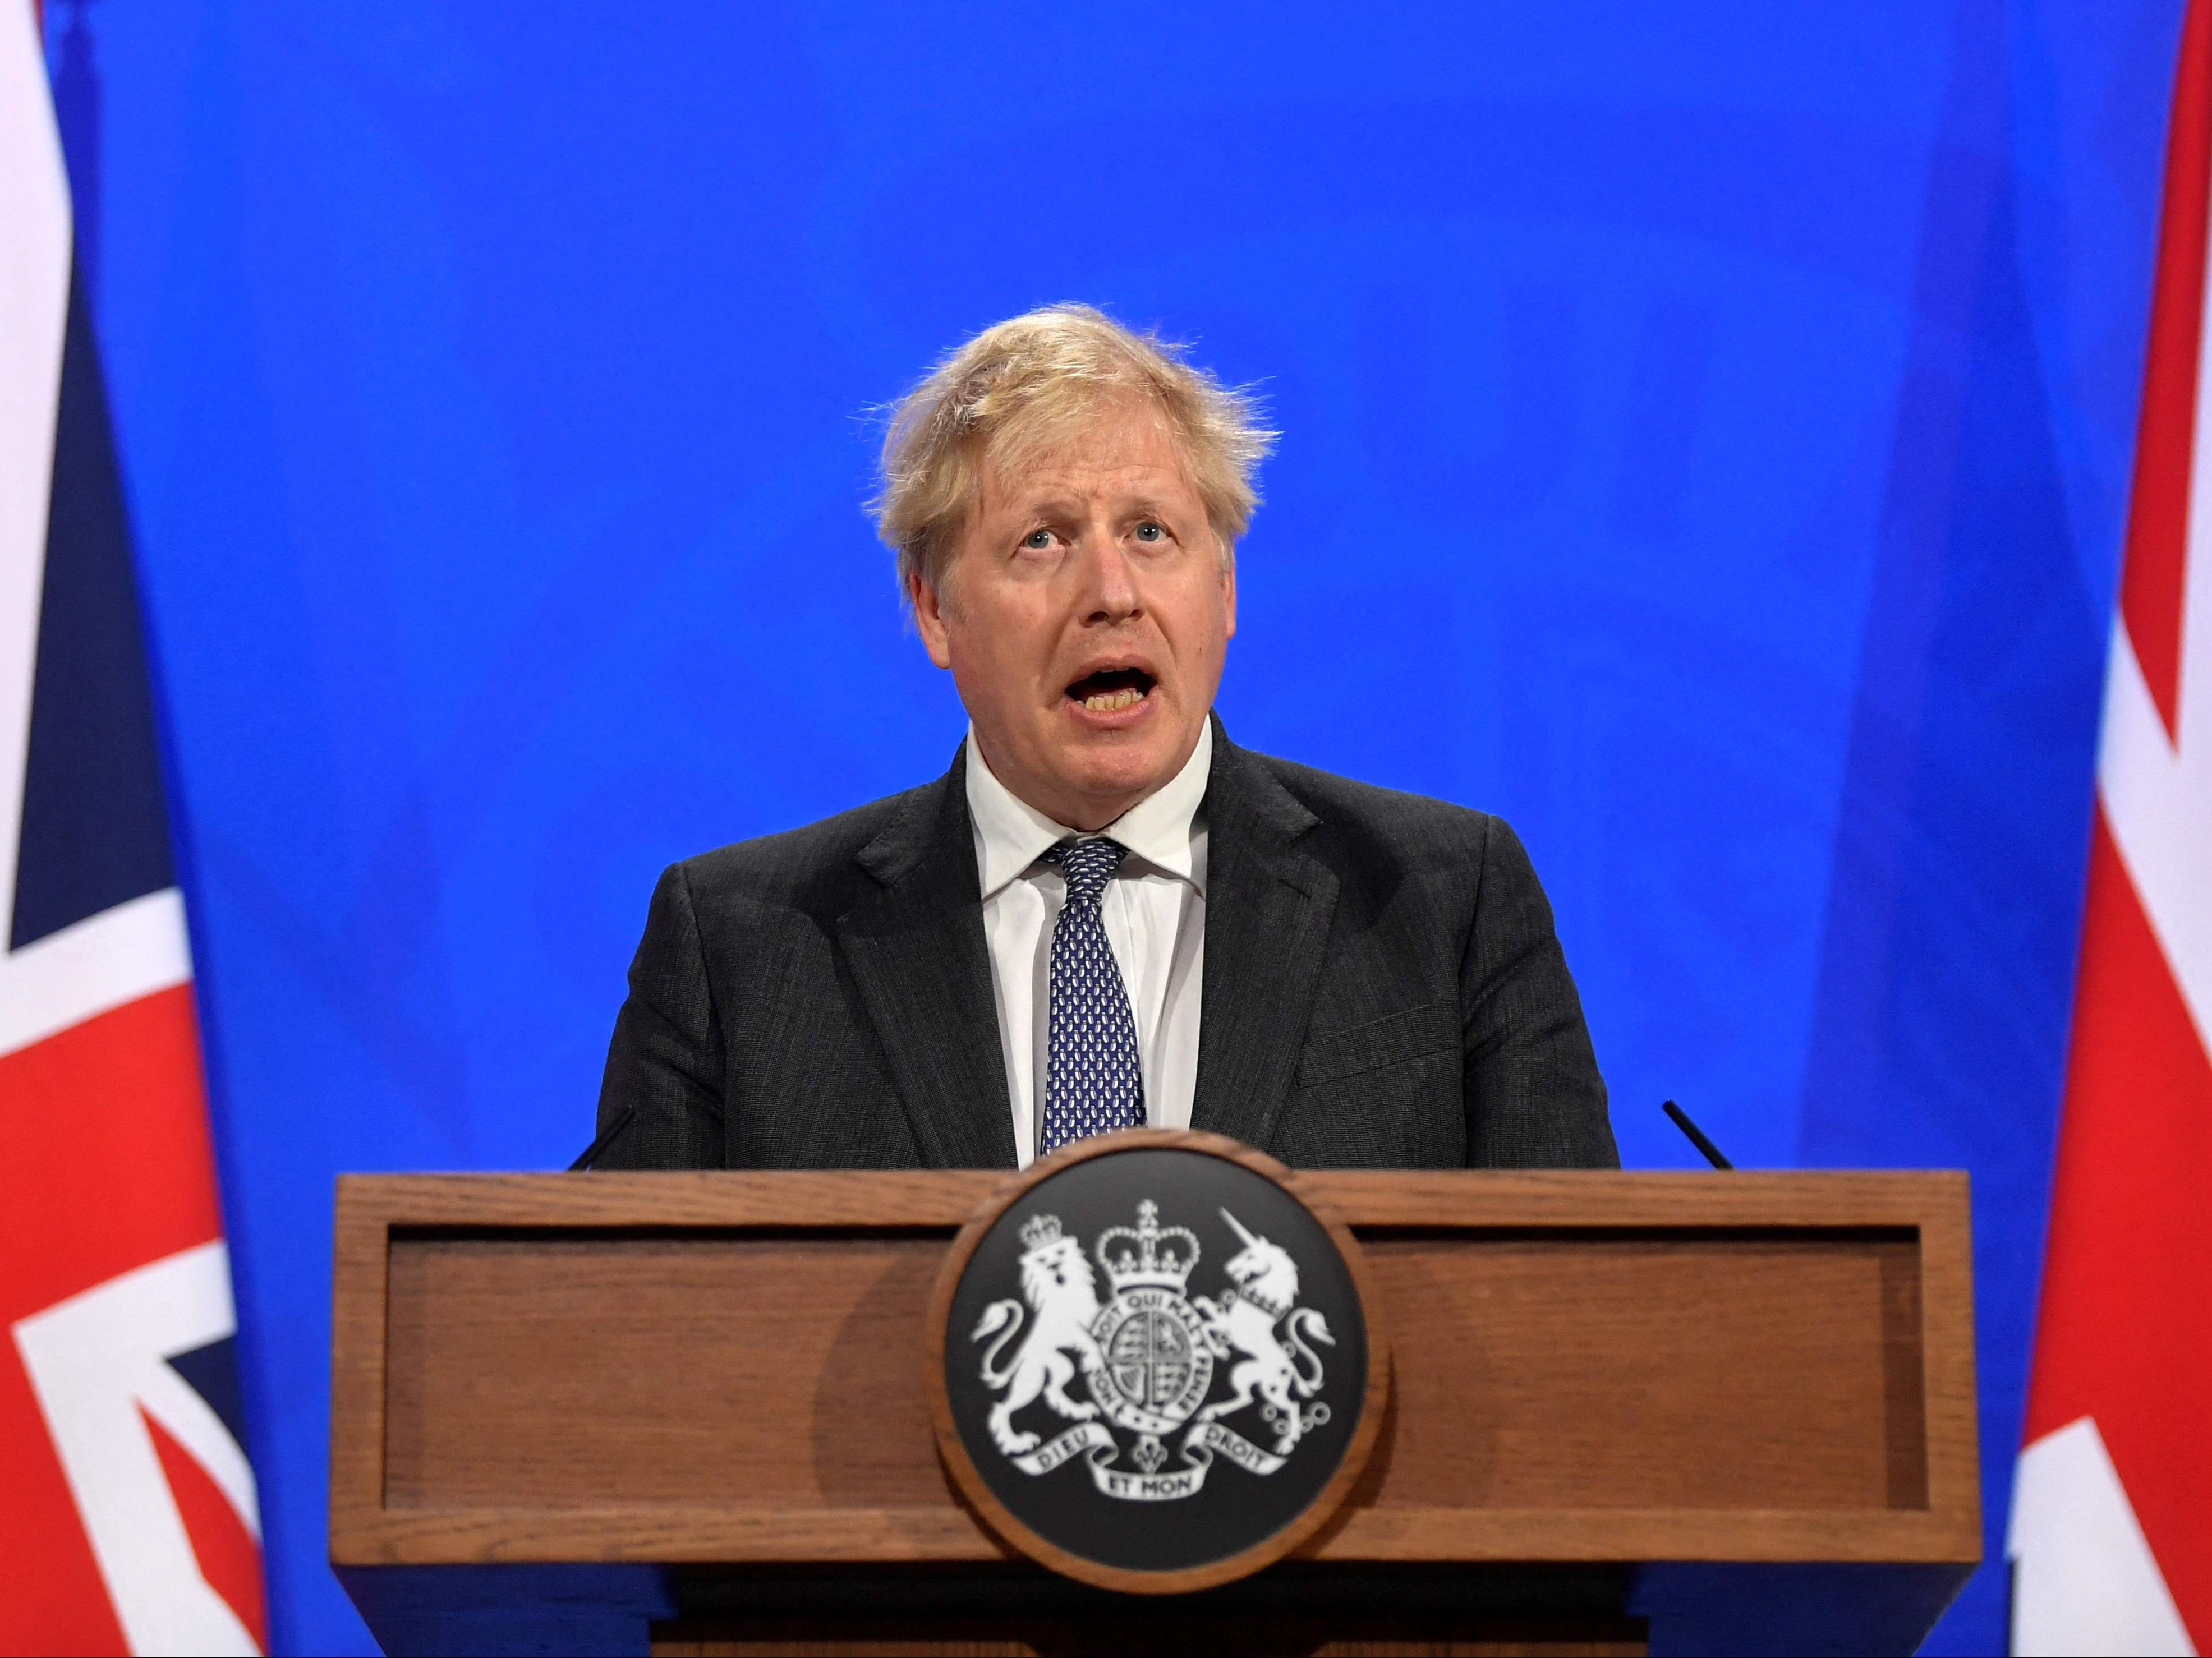 鲍里斯·约翰逊（Boris Johnson）穿着西装和领带：鲍里斯·约翰逊（Boris Johnson）发誓要通过Getty Images停止移动POOL / AFP